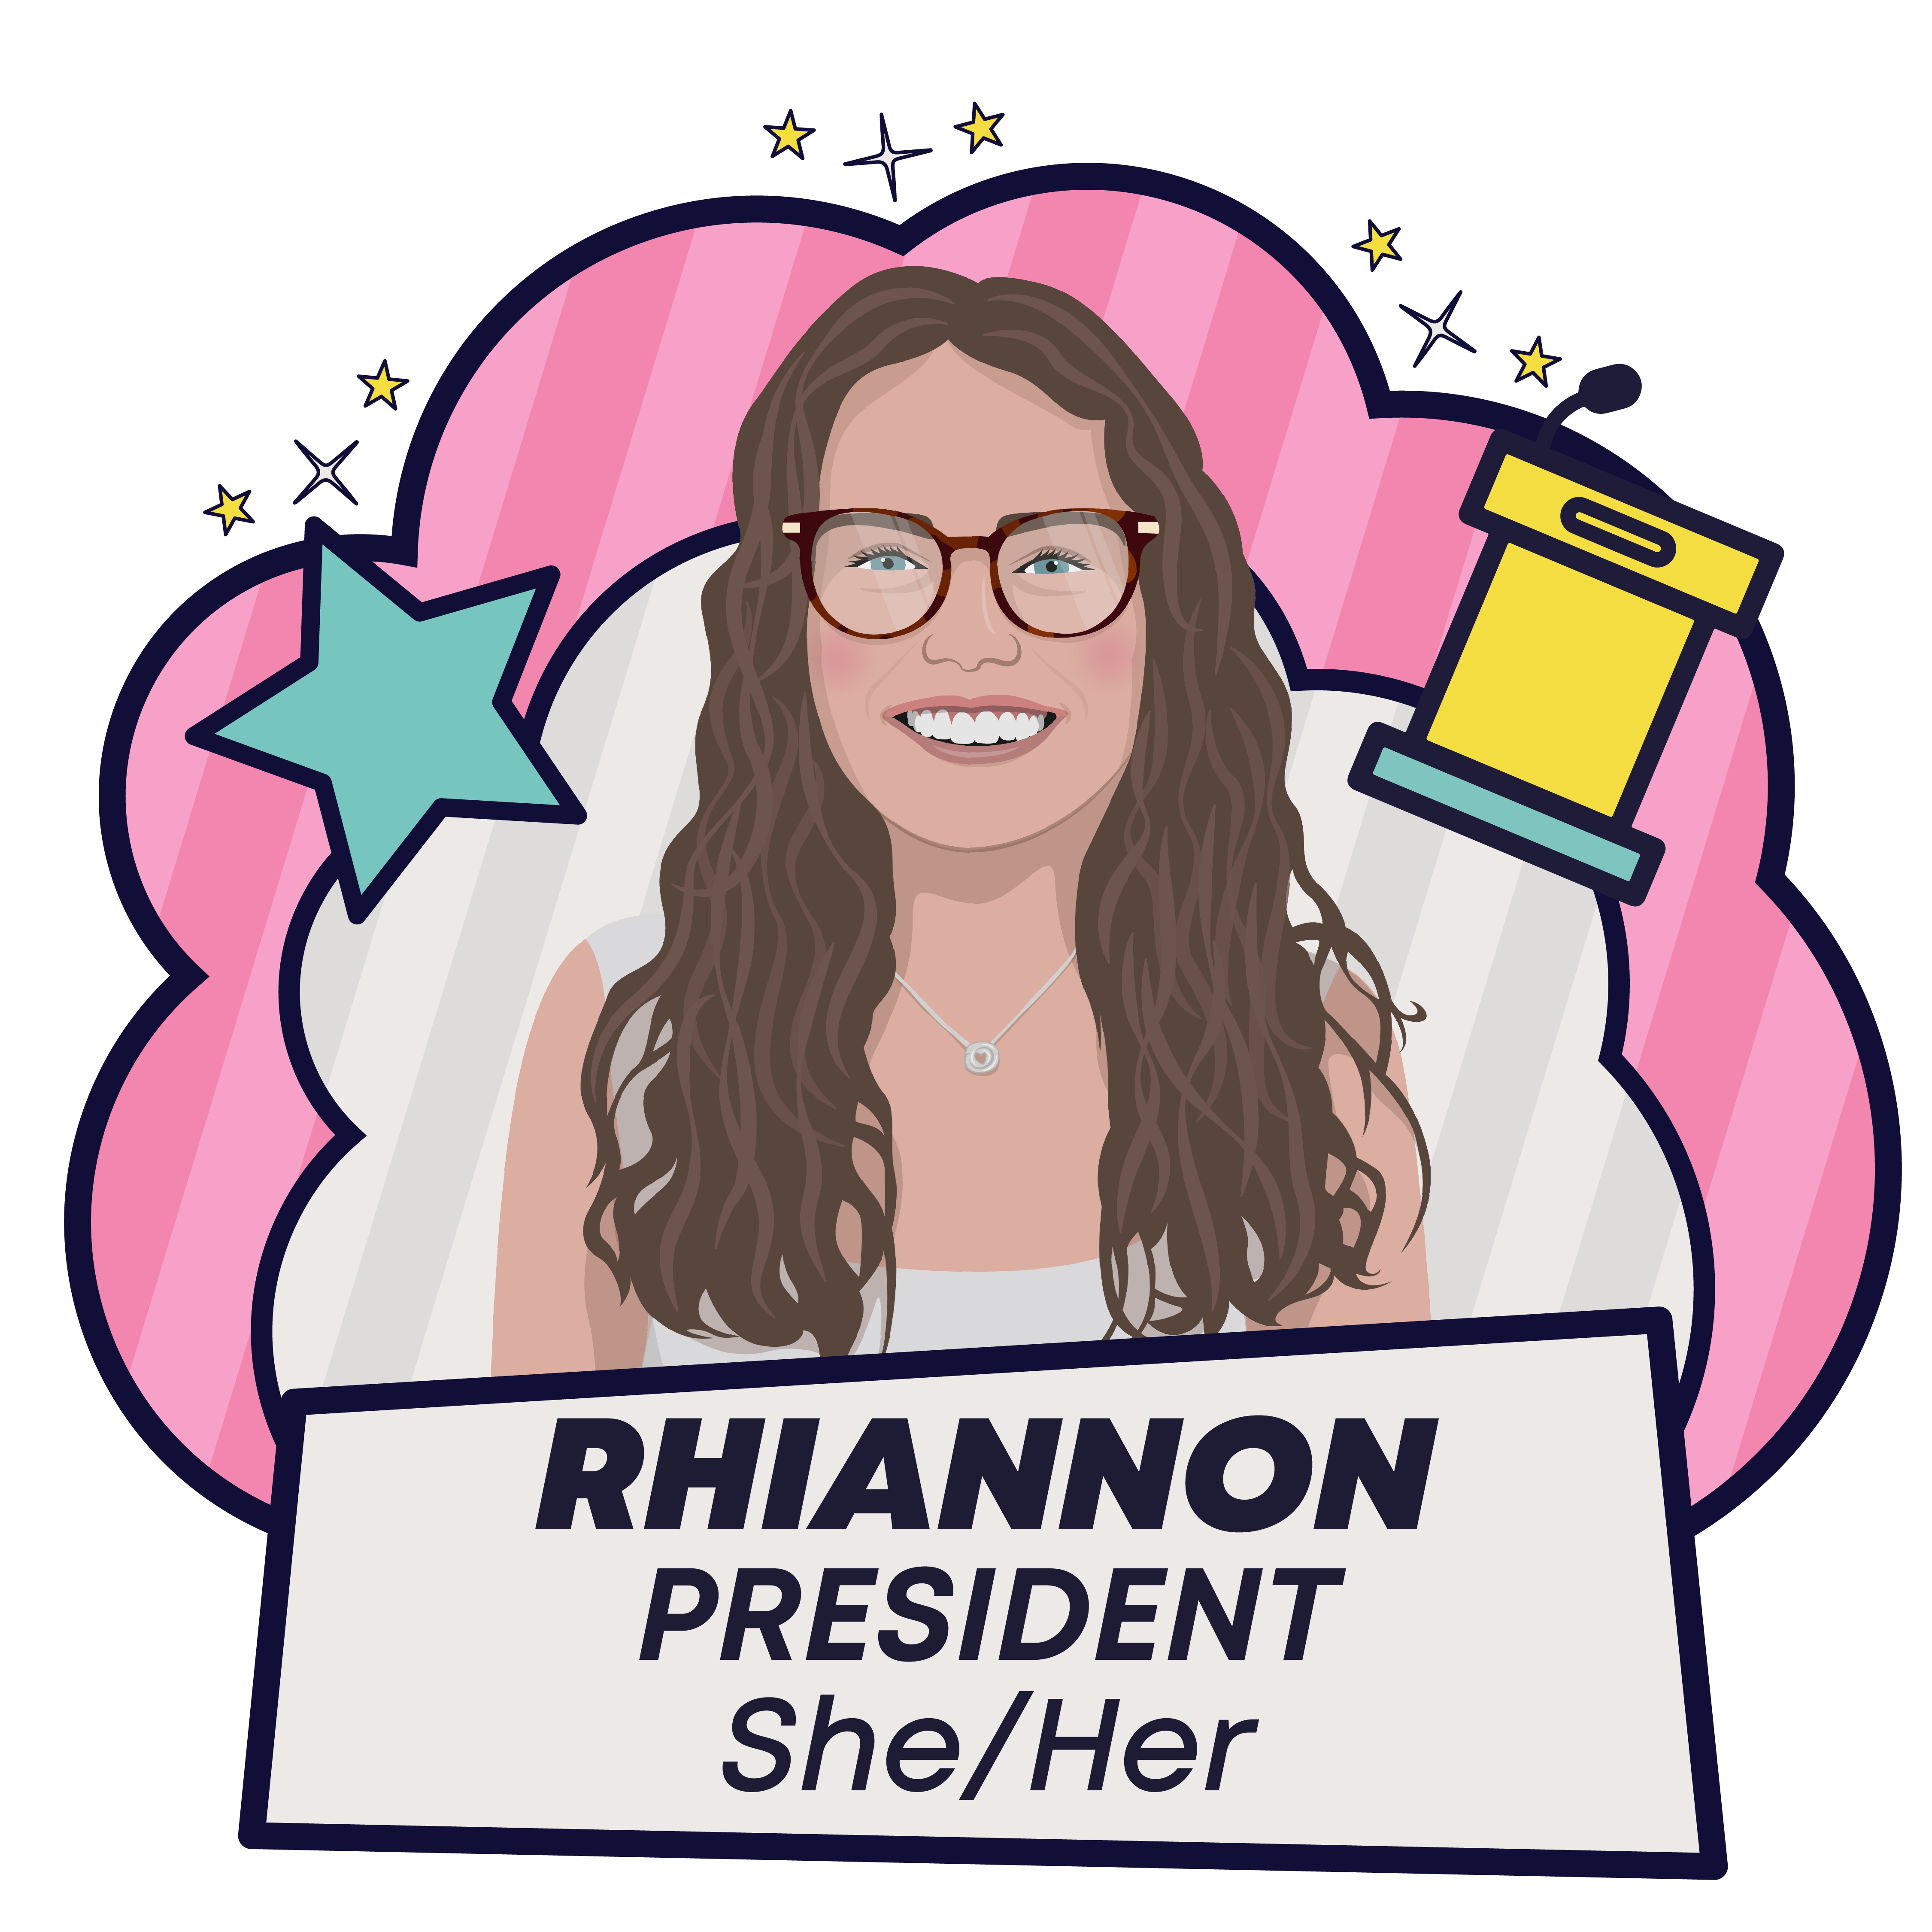 Rhiannon Jenkins - President - Pronouns: She/Her 